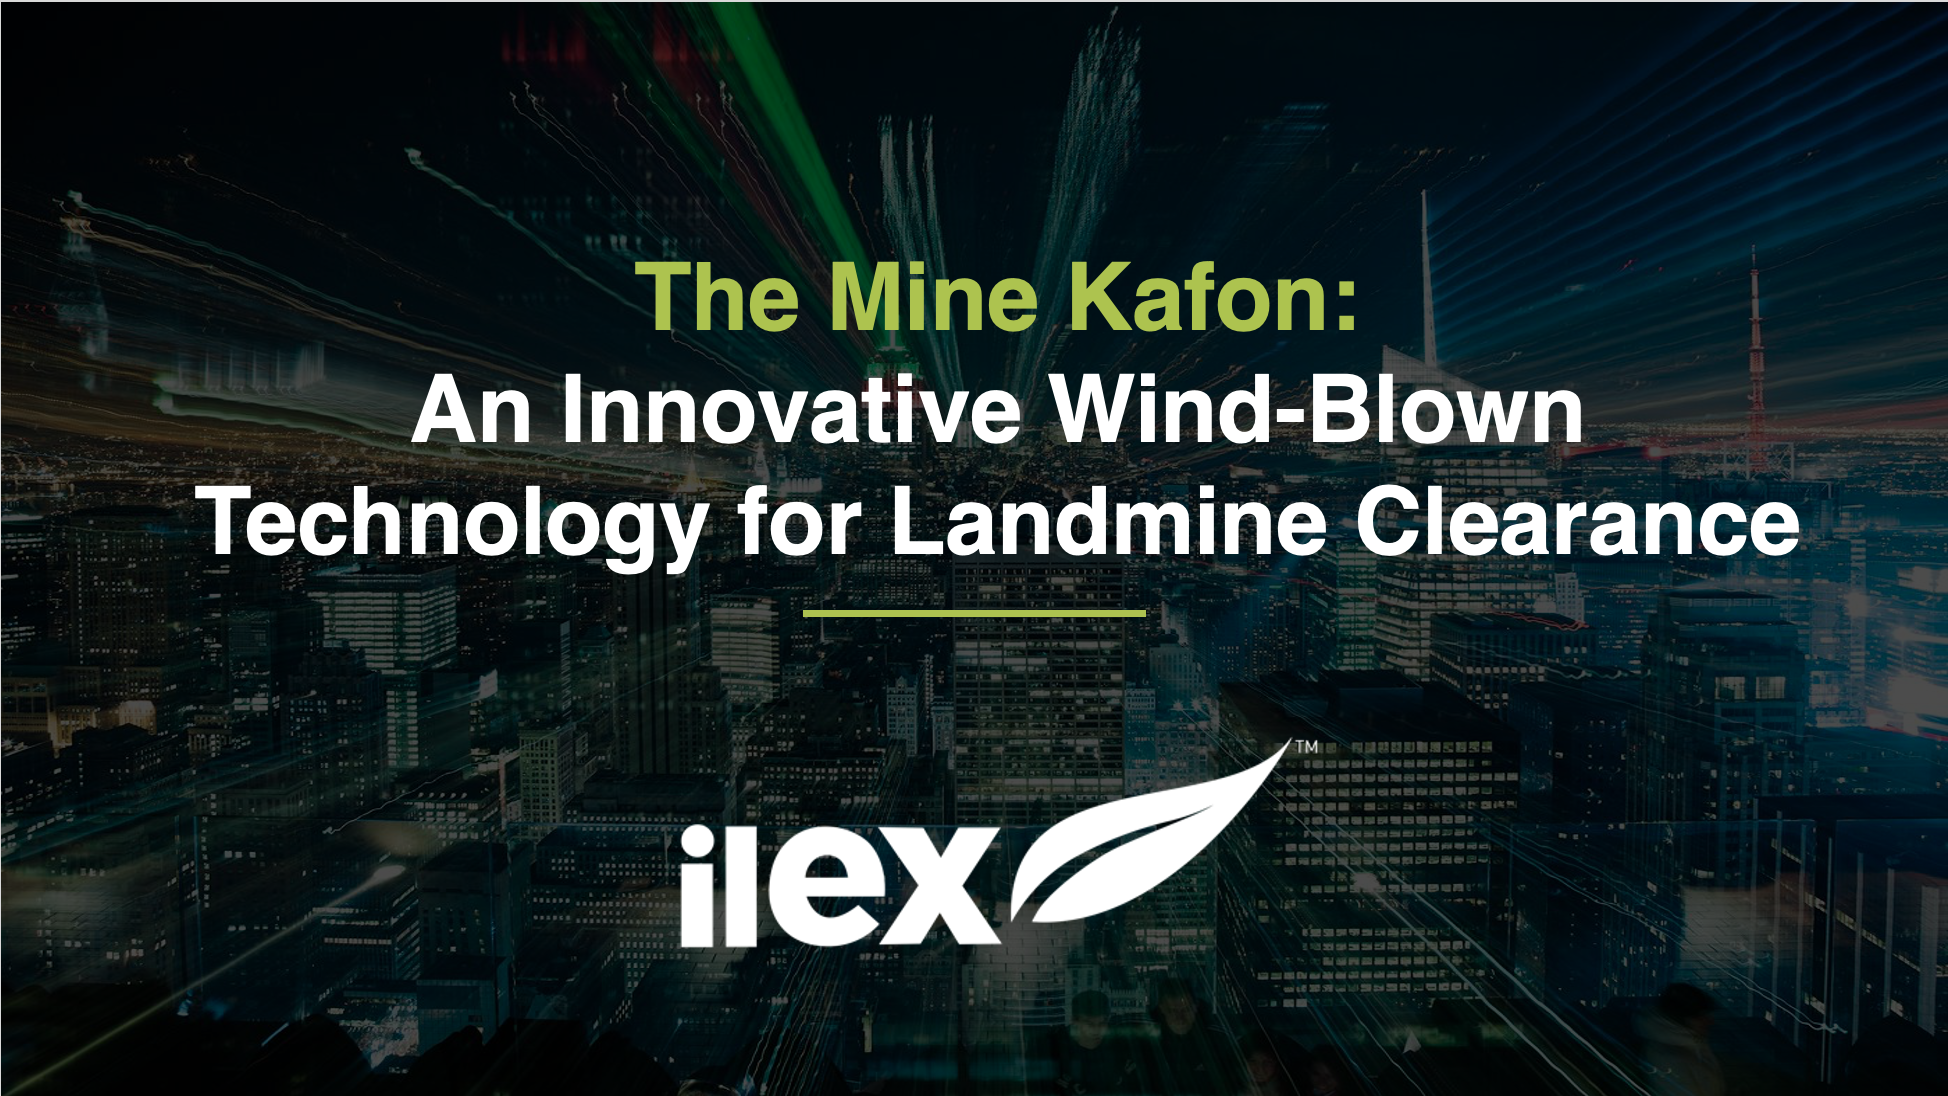 The Mine Kafon: An Innovative Wind-Blown Technology for Landmine Clearance